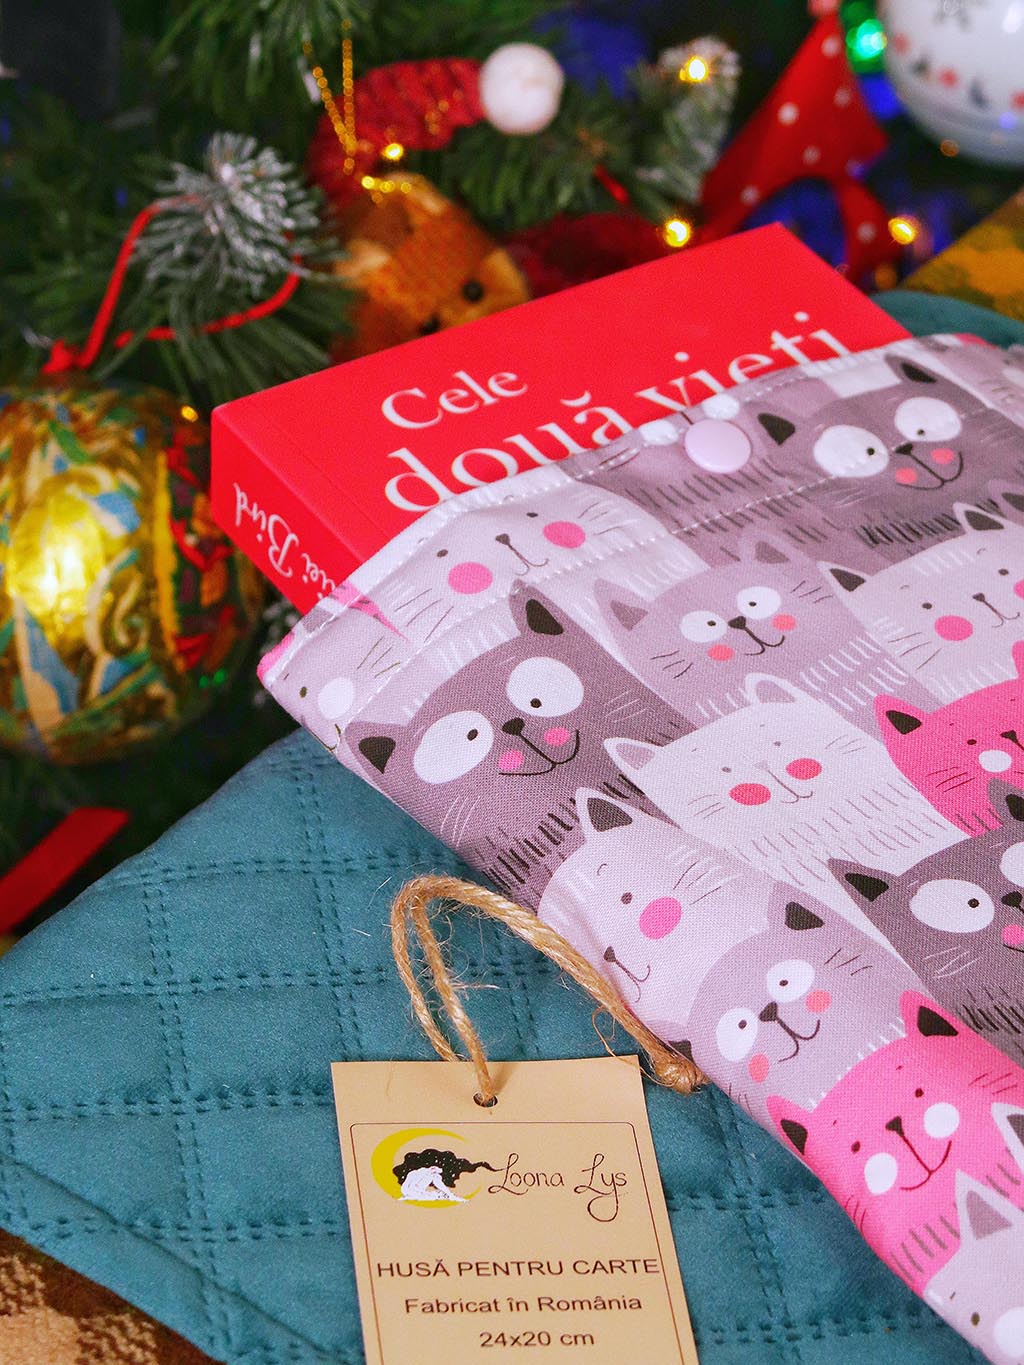 libris micul pulover rosu weninger sieg husa carte pisici loona lys ceai lovare berry jam